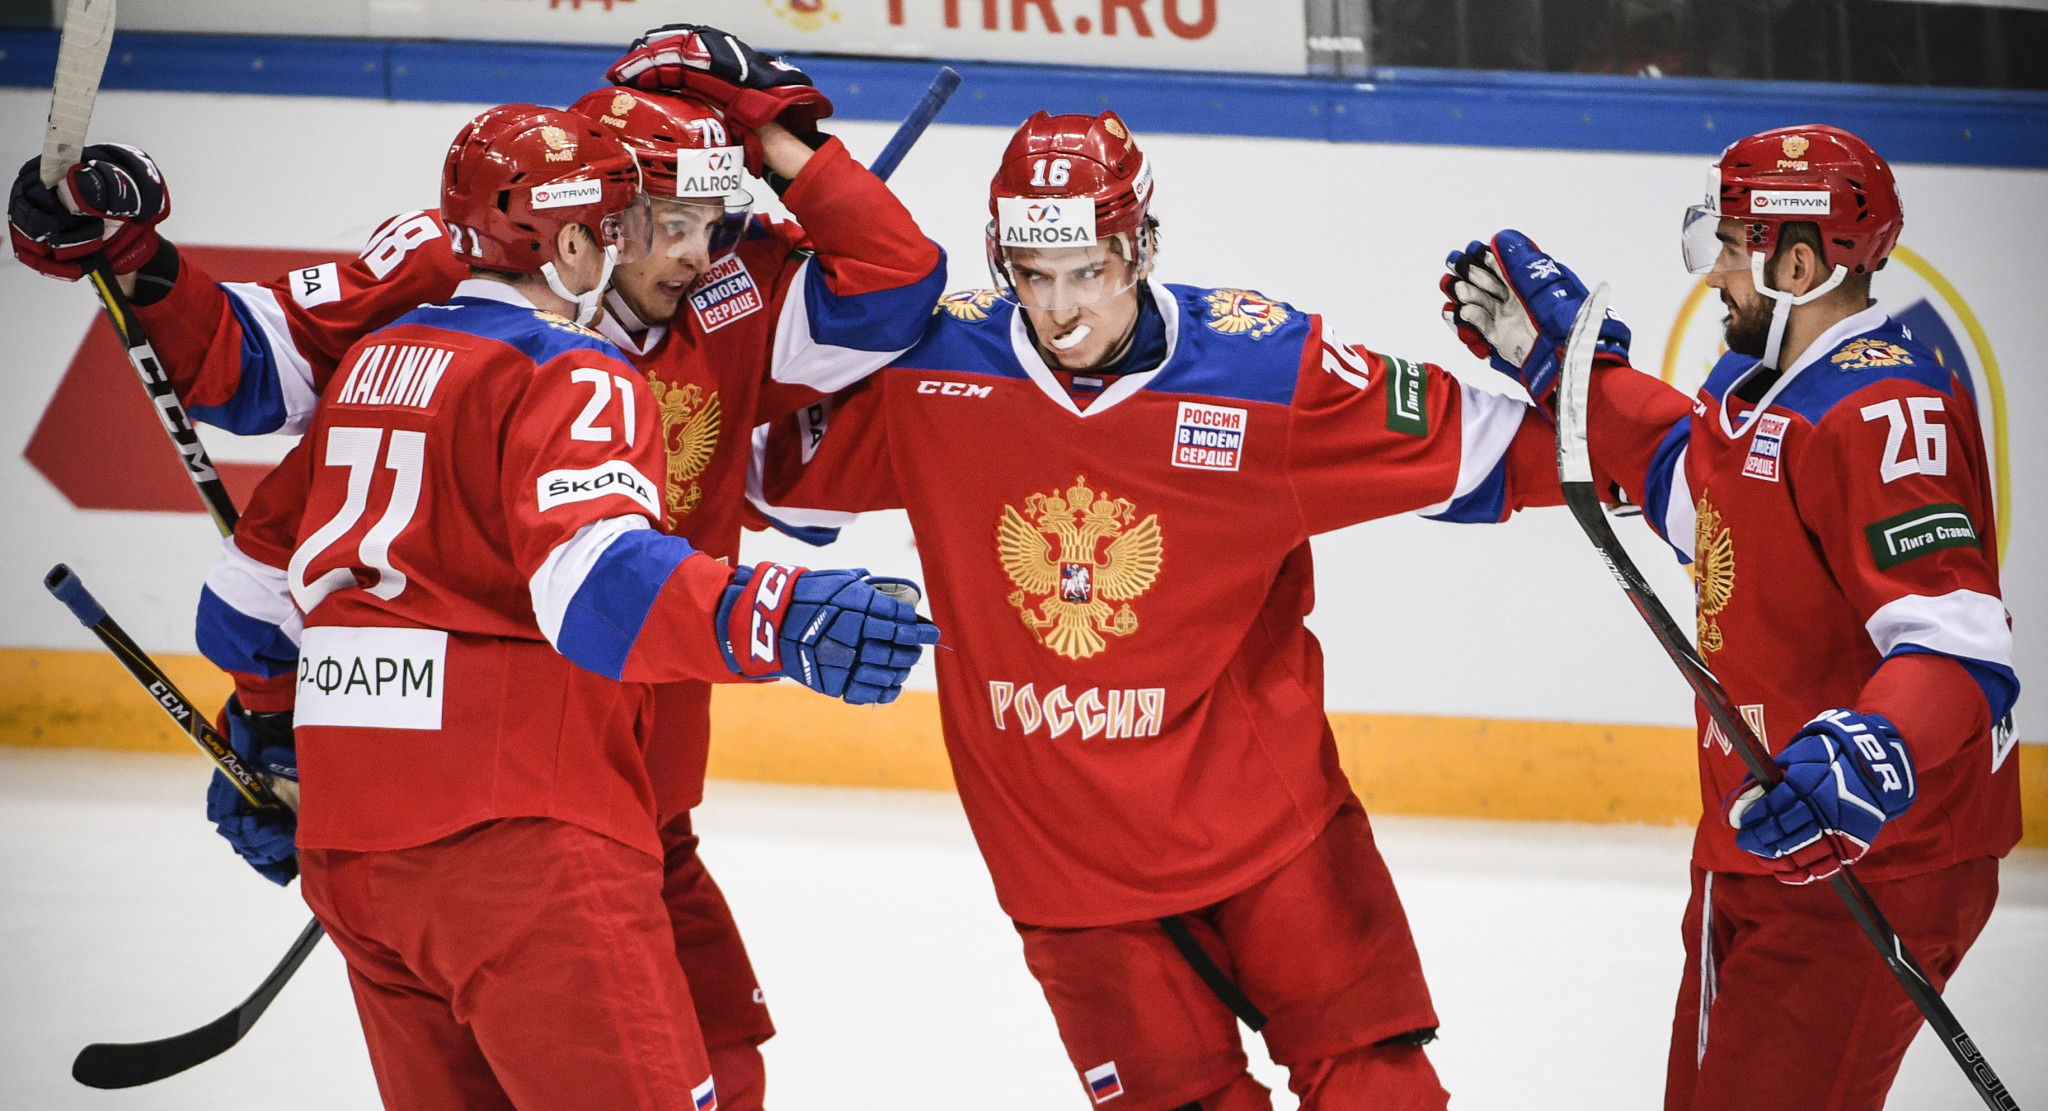 File:Russia national ice hockey team jerseys 2018 IHWC.png - Wikipedia